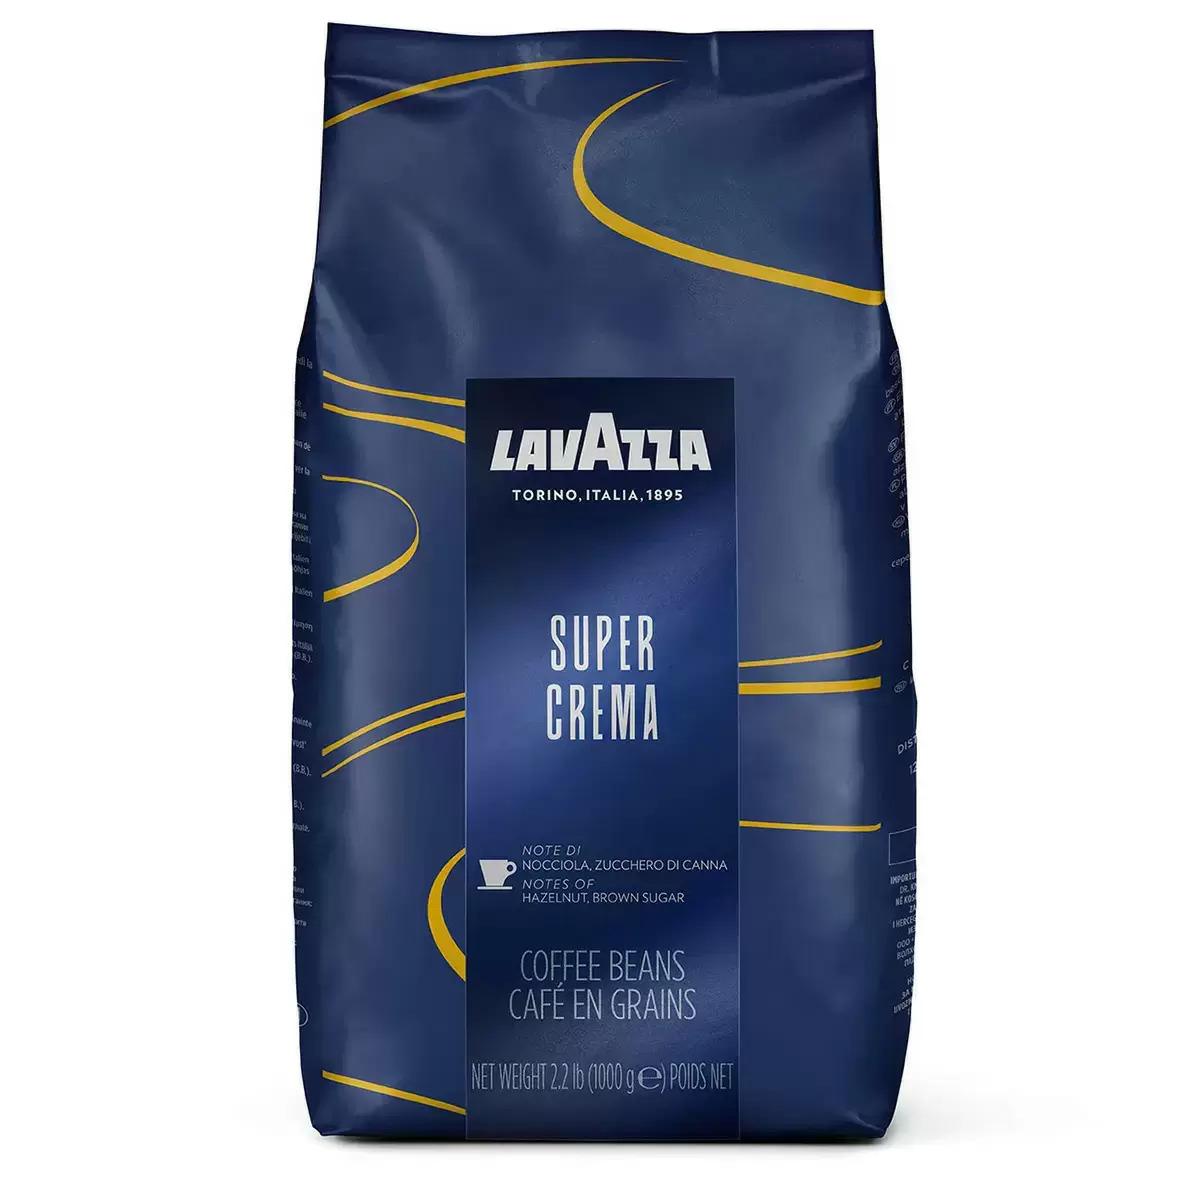 Lavazza Super Crema Whole Bean Coffee Blend for $13.10 Shipped